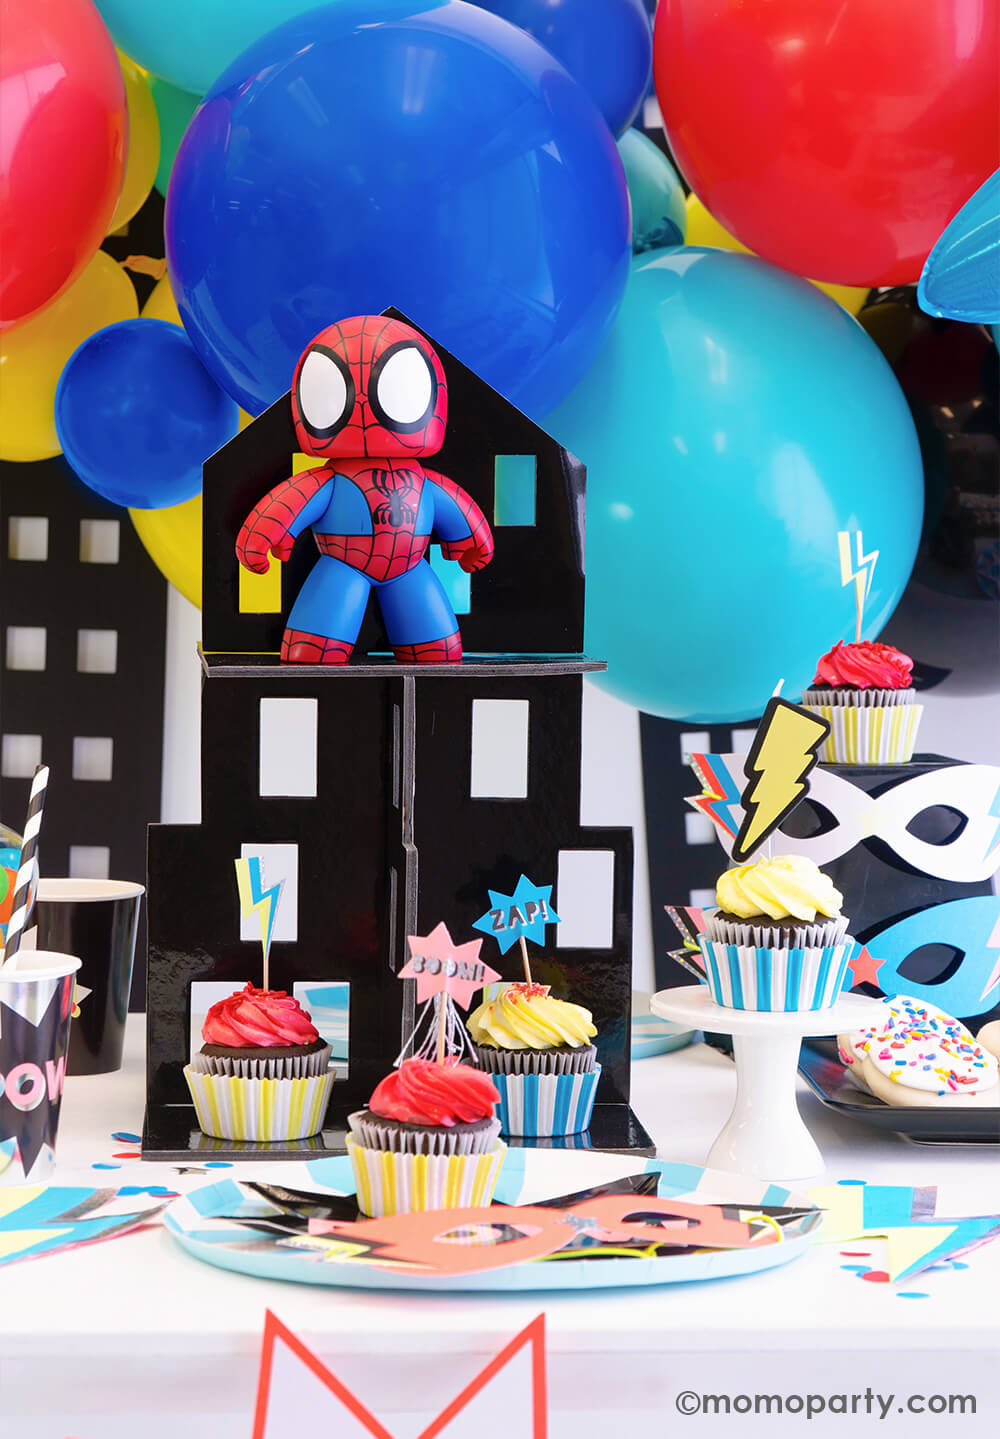 SPIDERMAN Standard Heart Shaped Foil Balloon Birthday Decoration Spider-man  